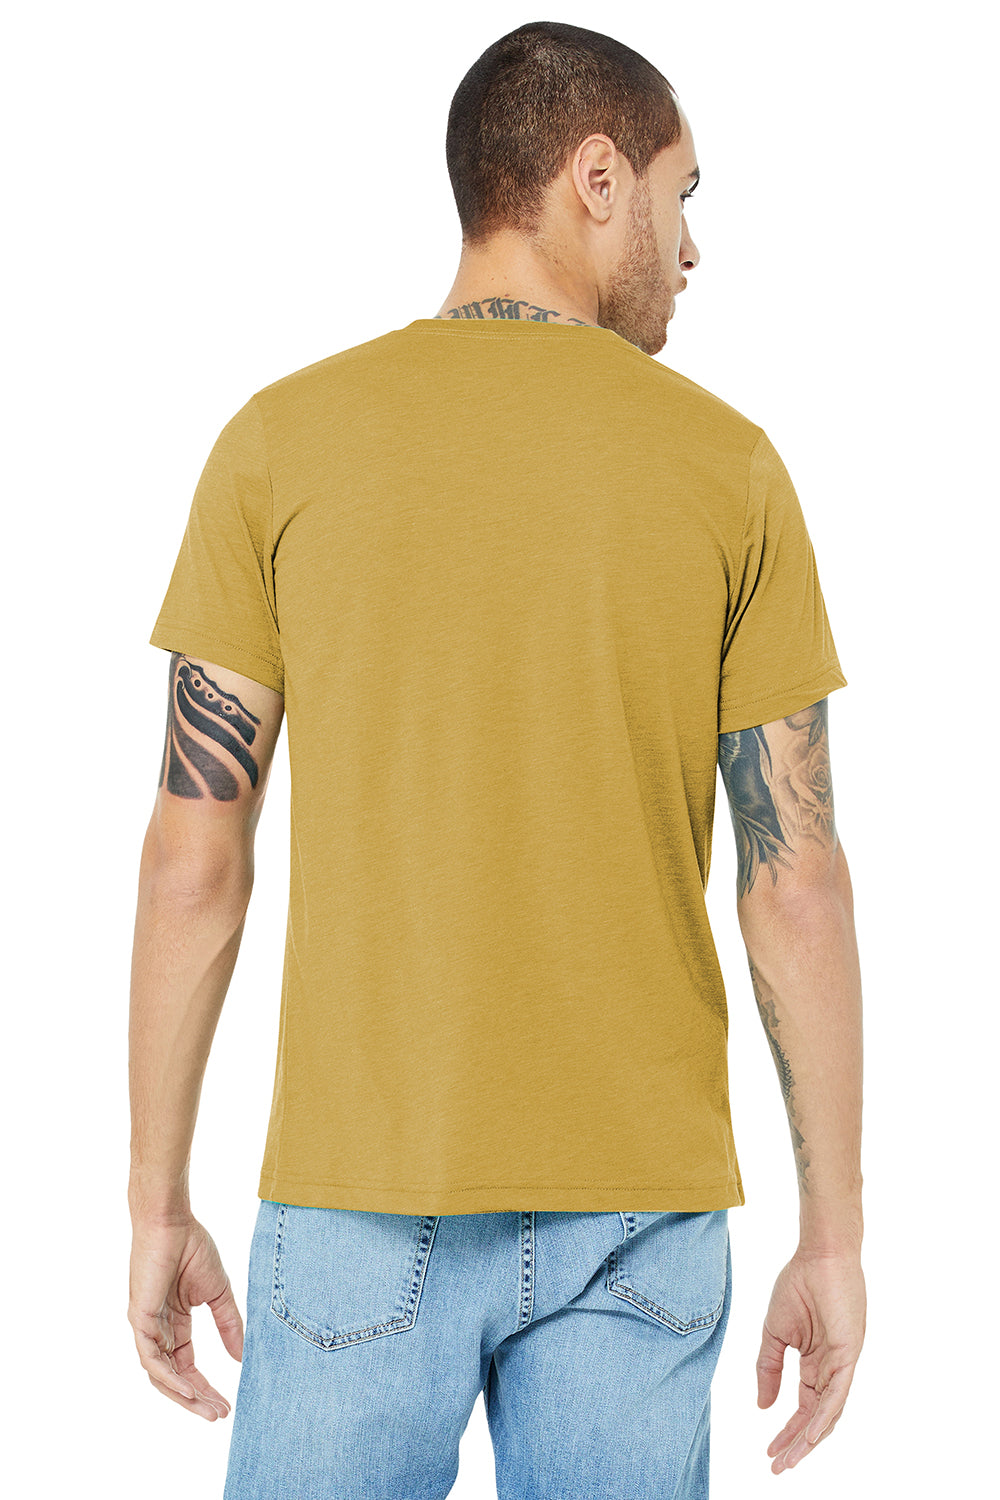 Bella + Canvas BC3413/3413C/3413 Mens Short Sleeve Crewneck T-Shirt Mustard Yellow Model Back